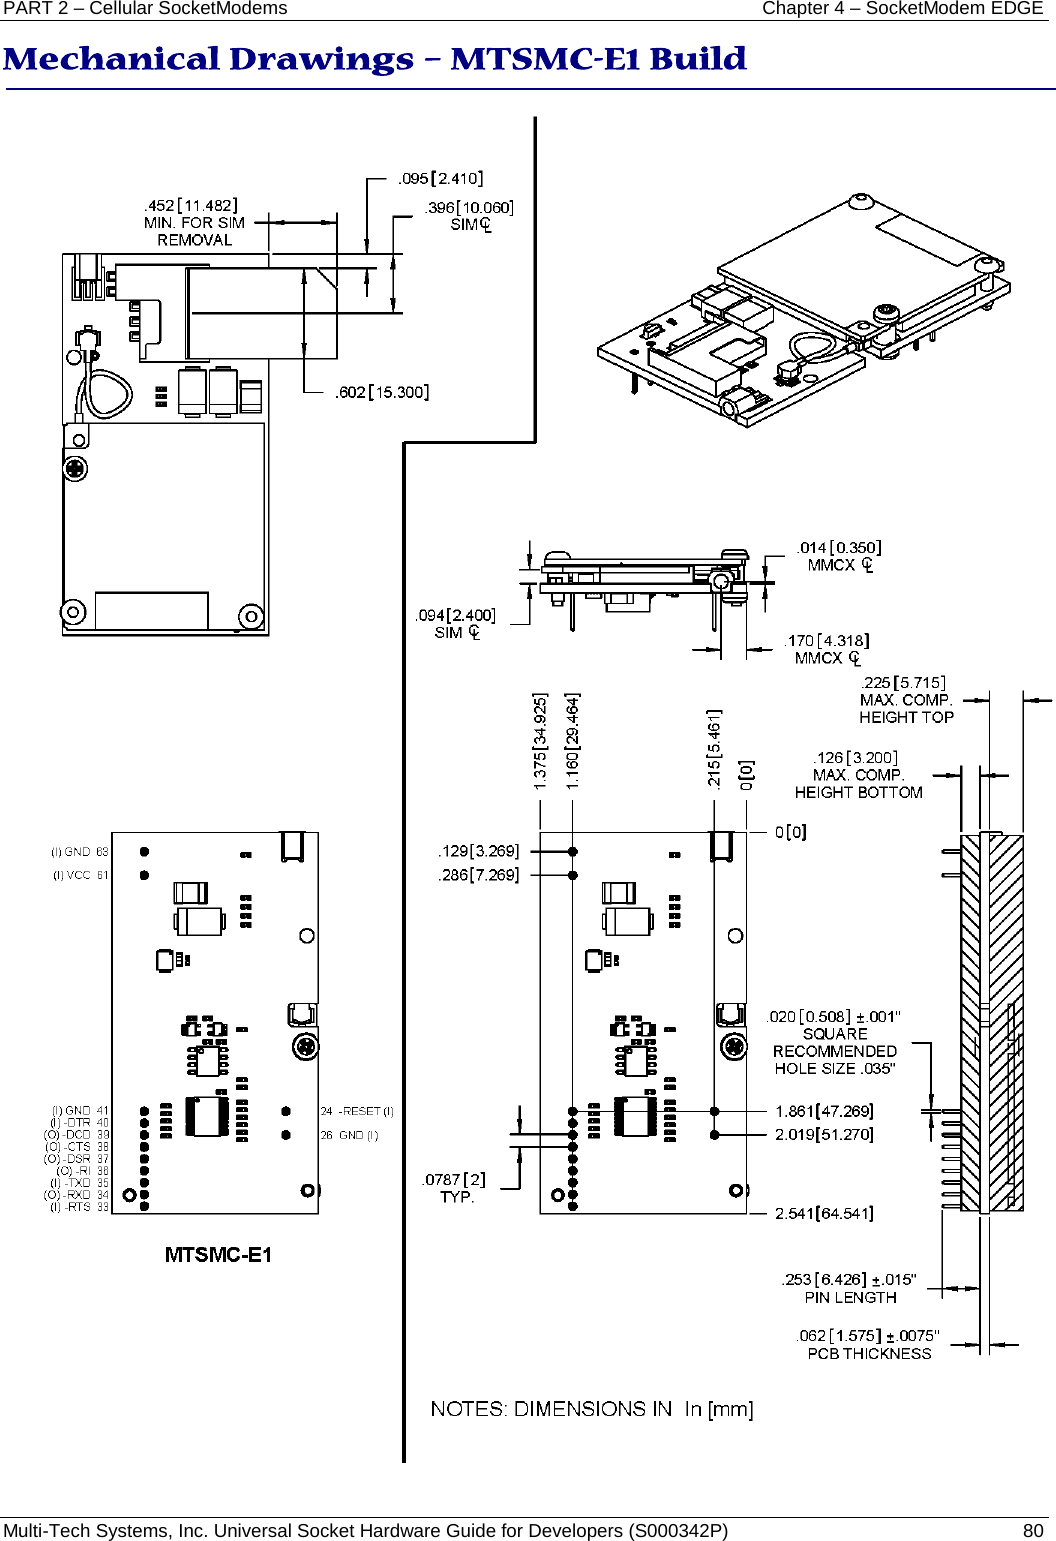 PART 2 – Cellular SocketModems Chapter 4 – SocketModem EDGE Multi-Tech Systems, Inc. Universal Socket Hardware Guide for Developers (S000342P)  80  Mechanical Drawings – MTSMC-E1 Build  